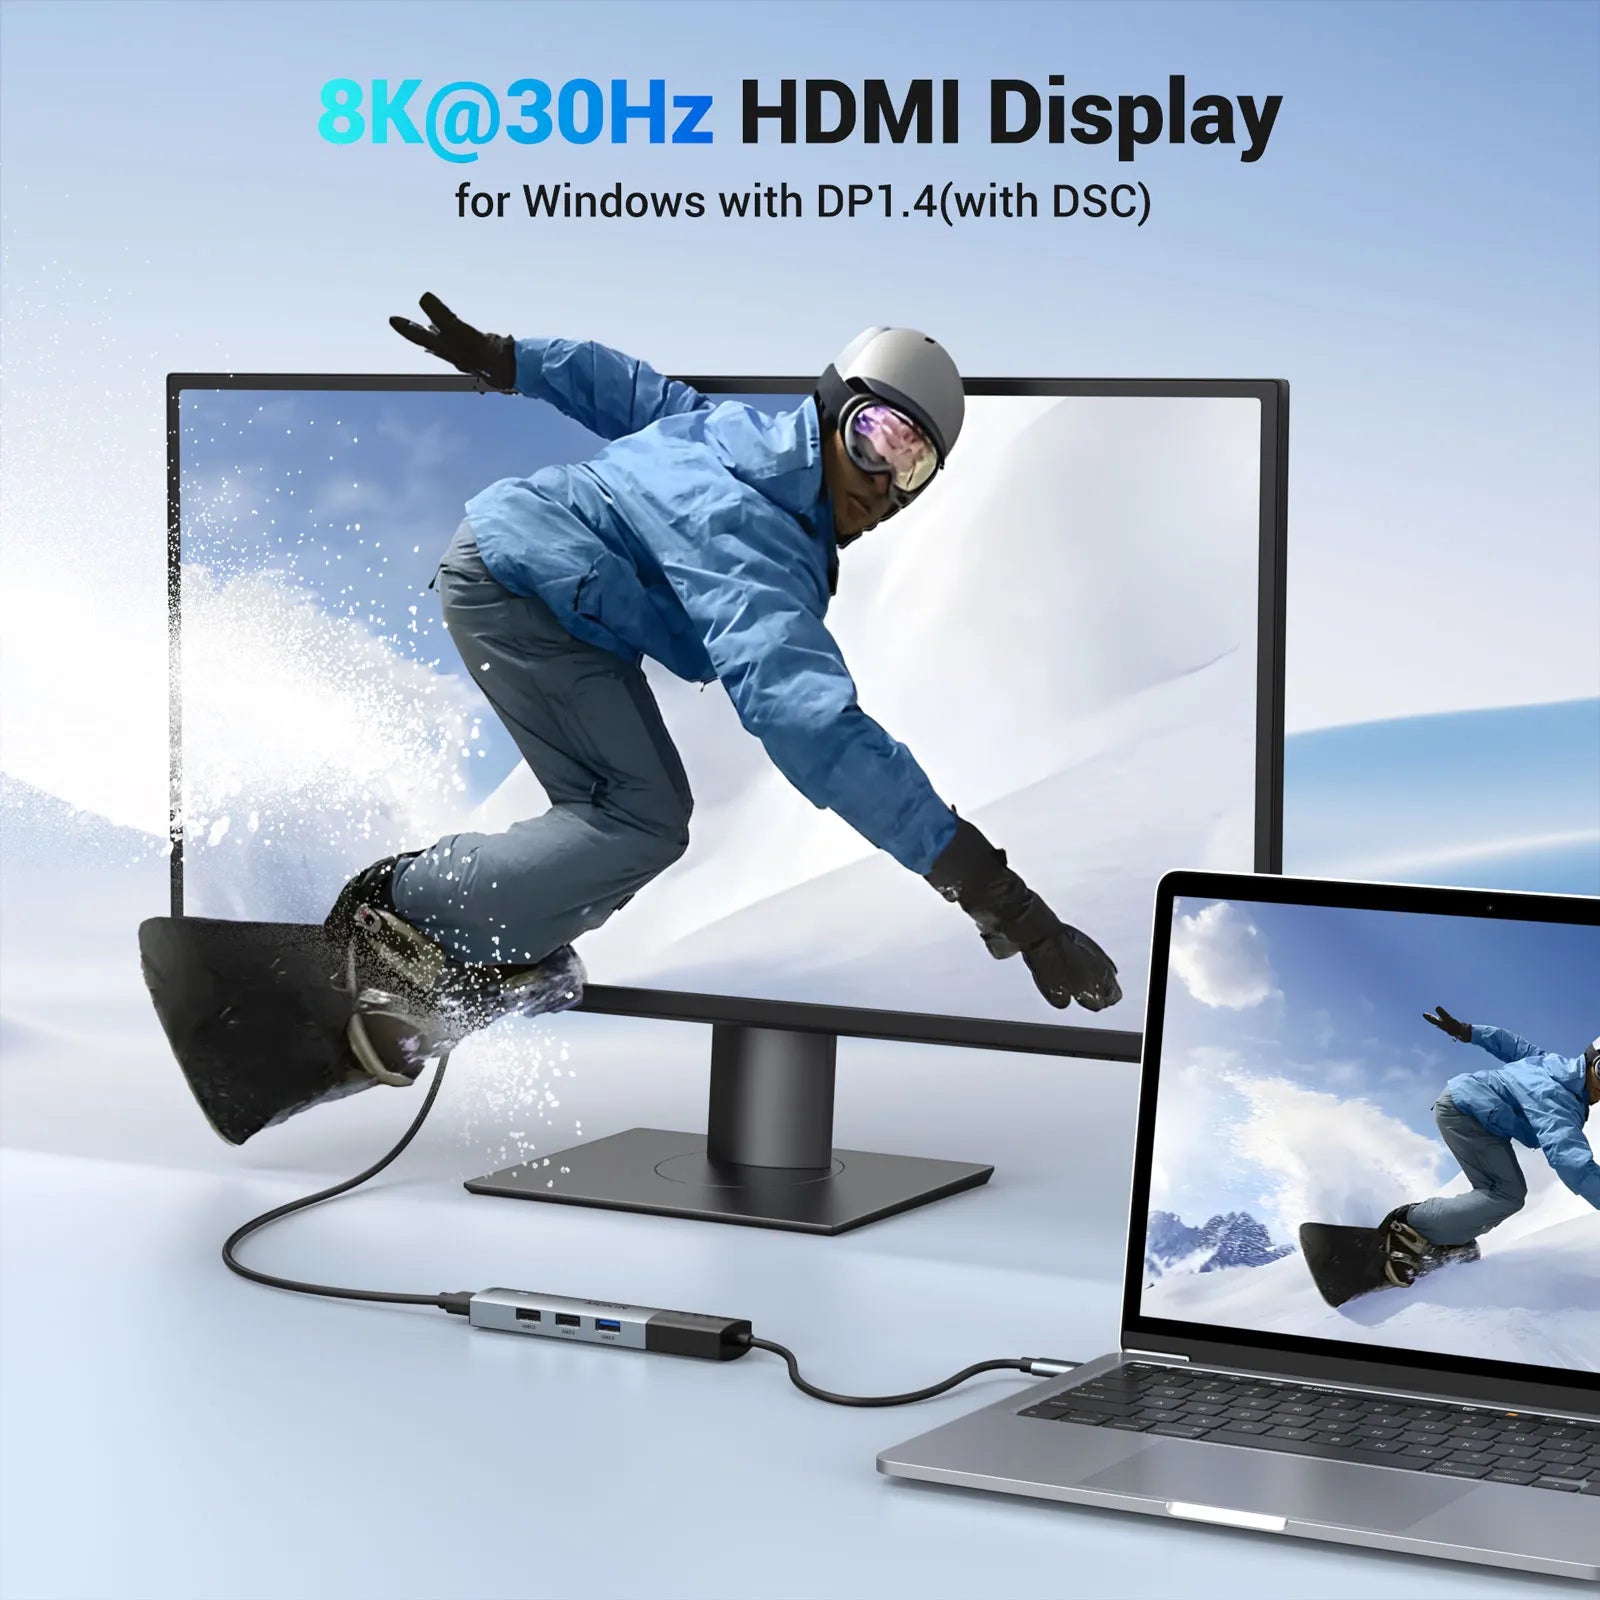 8K@30Hz HDMI Display